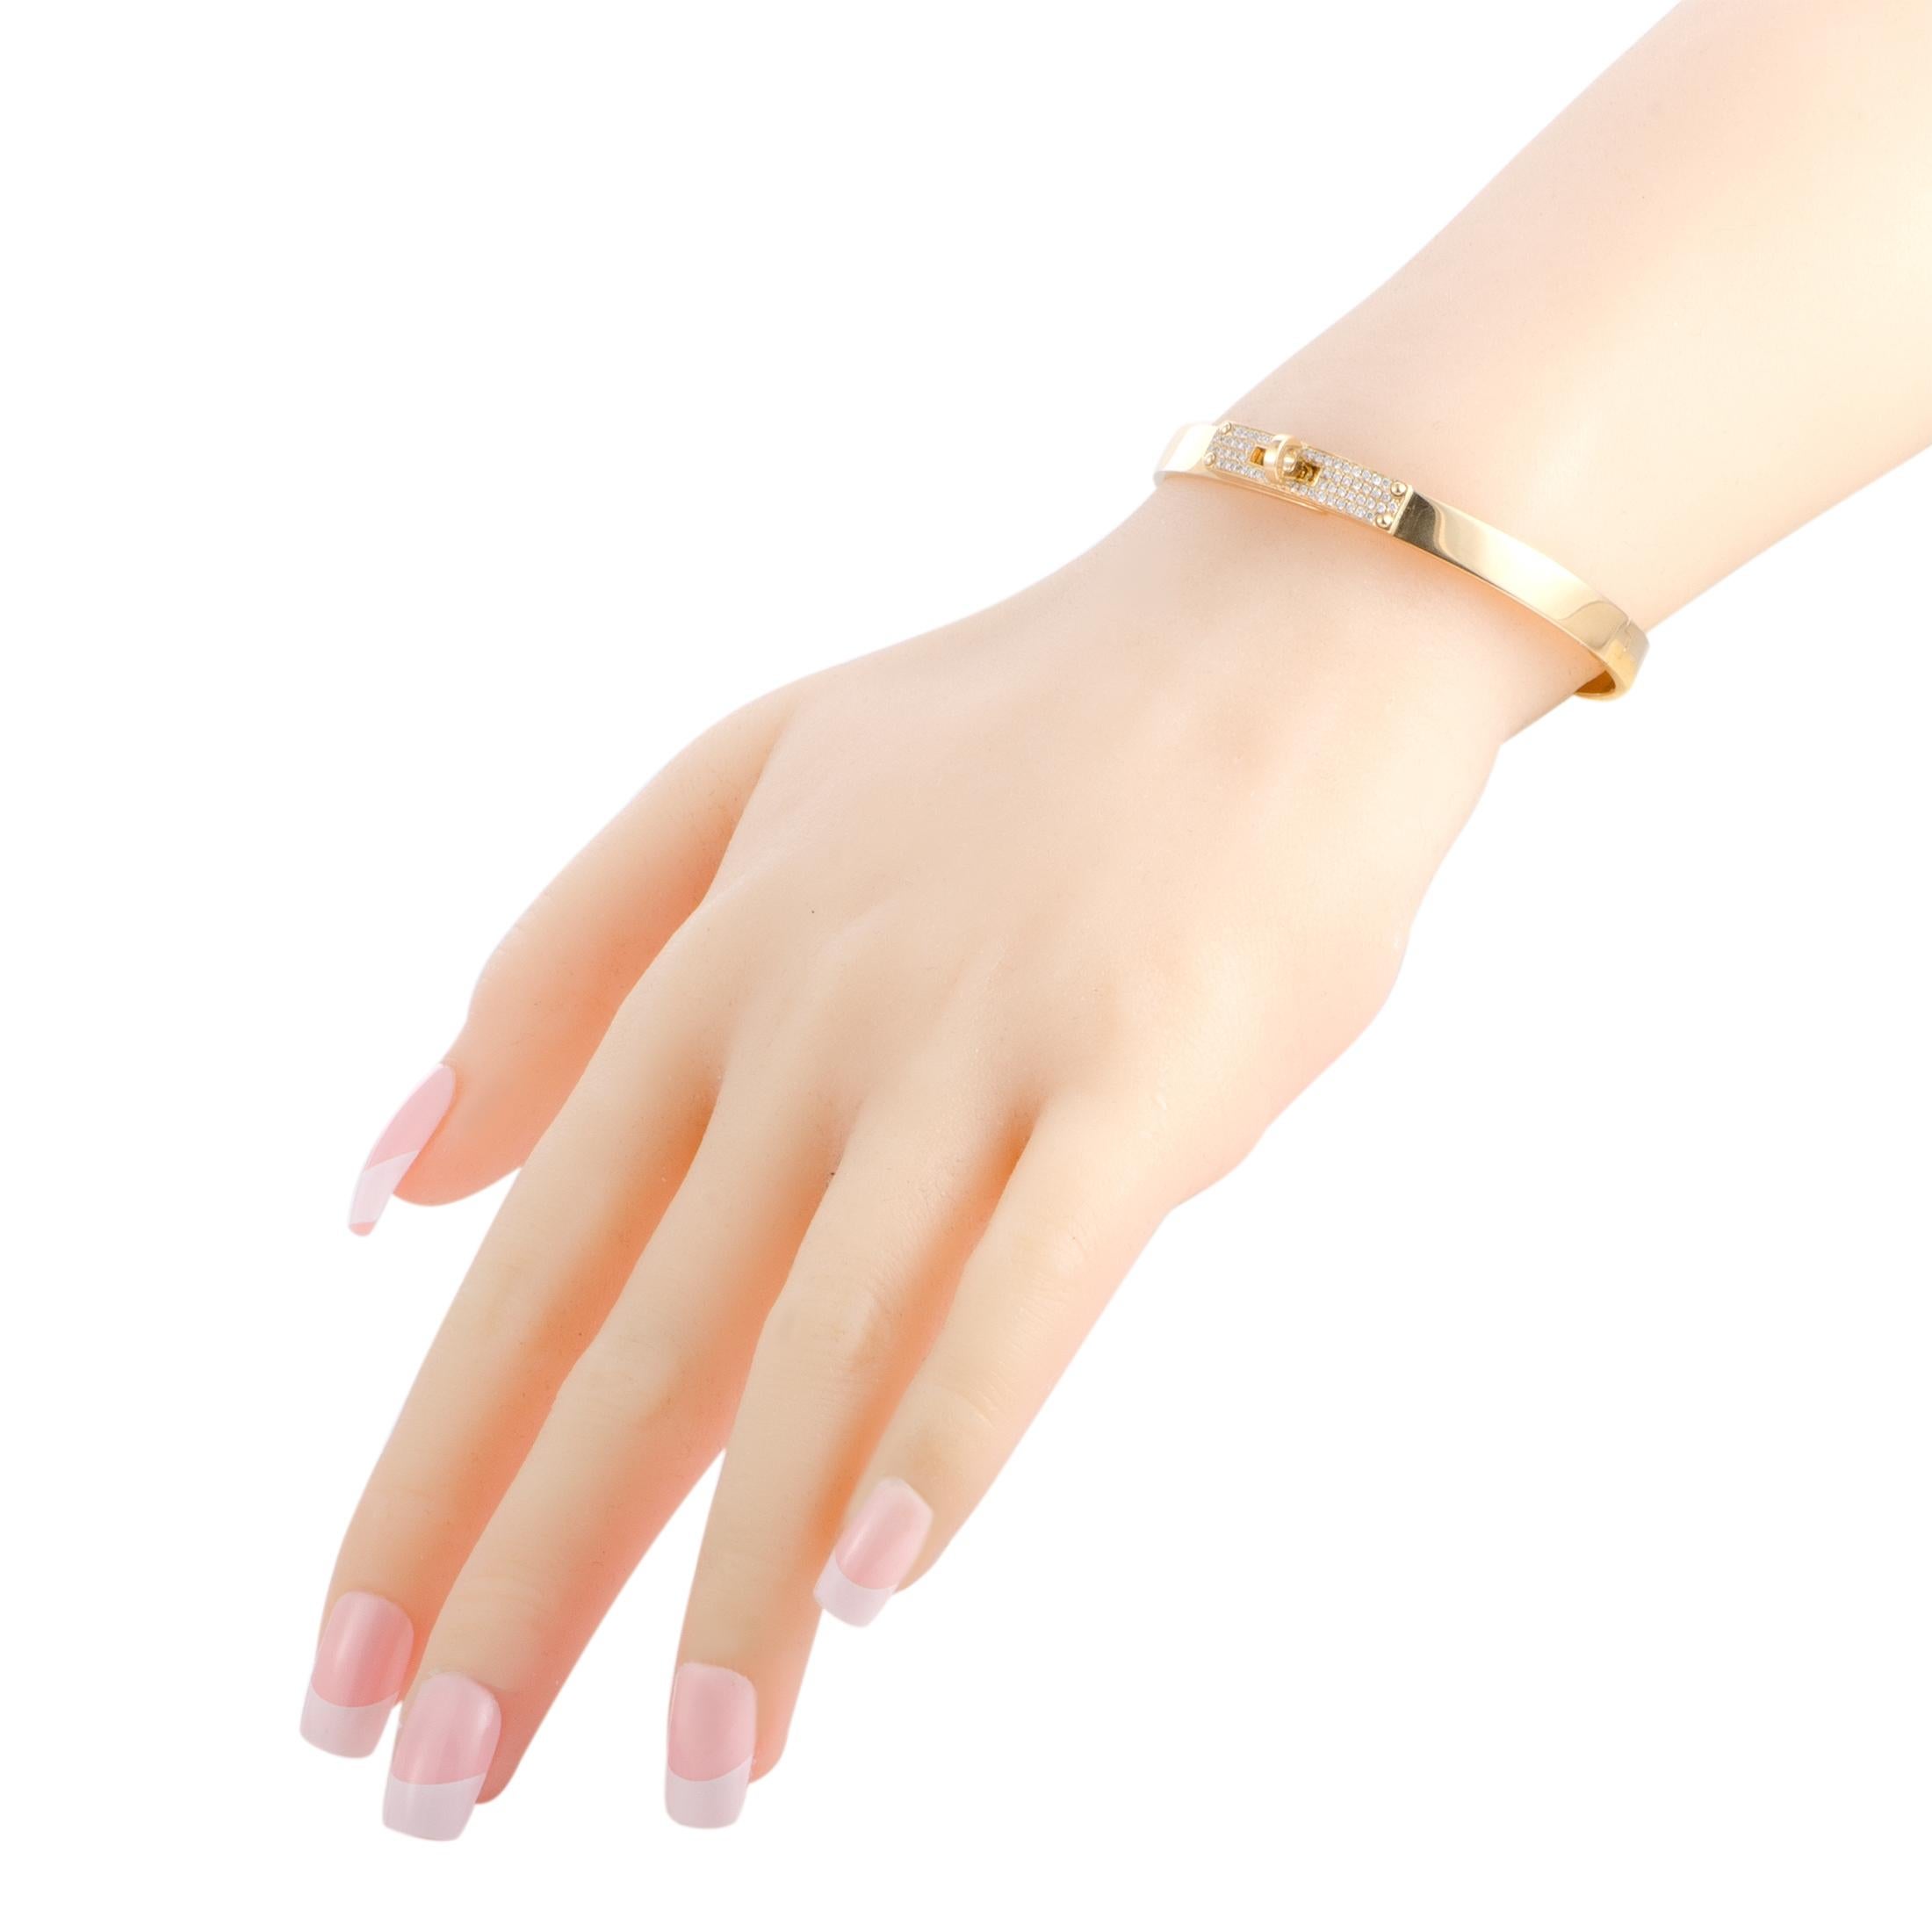 Kelly bracelet, small model  Bracelet collection, Gold bangle set, White  gold bangle